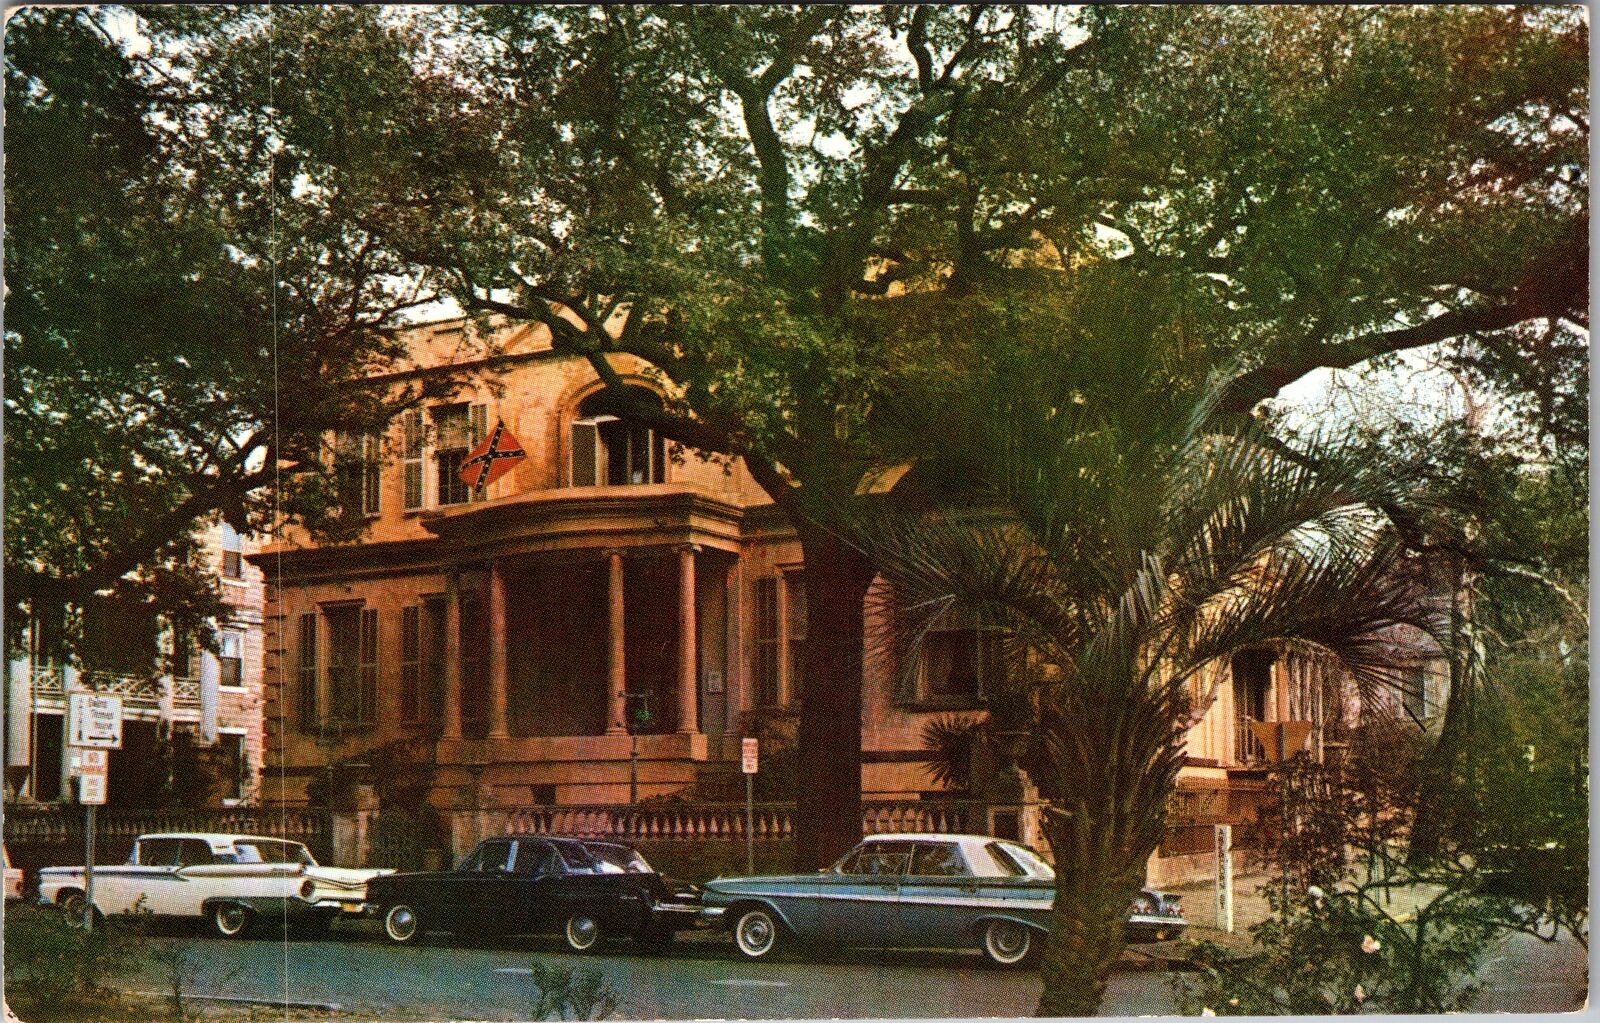 Savannah GA-Georgia, Owens-Thomas House, Vintage Postcard